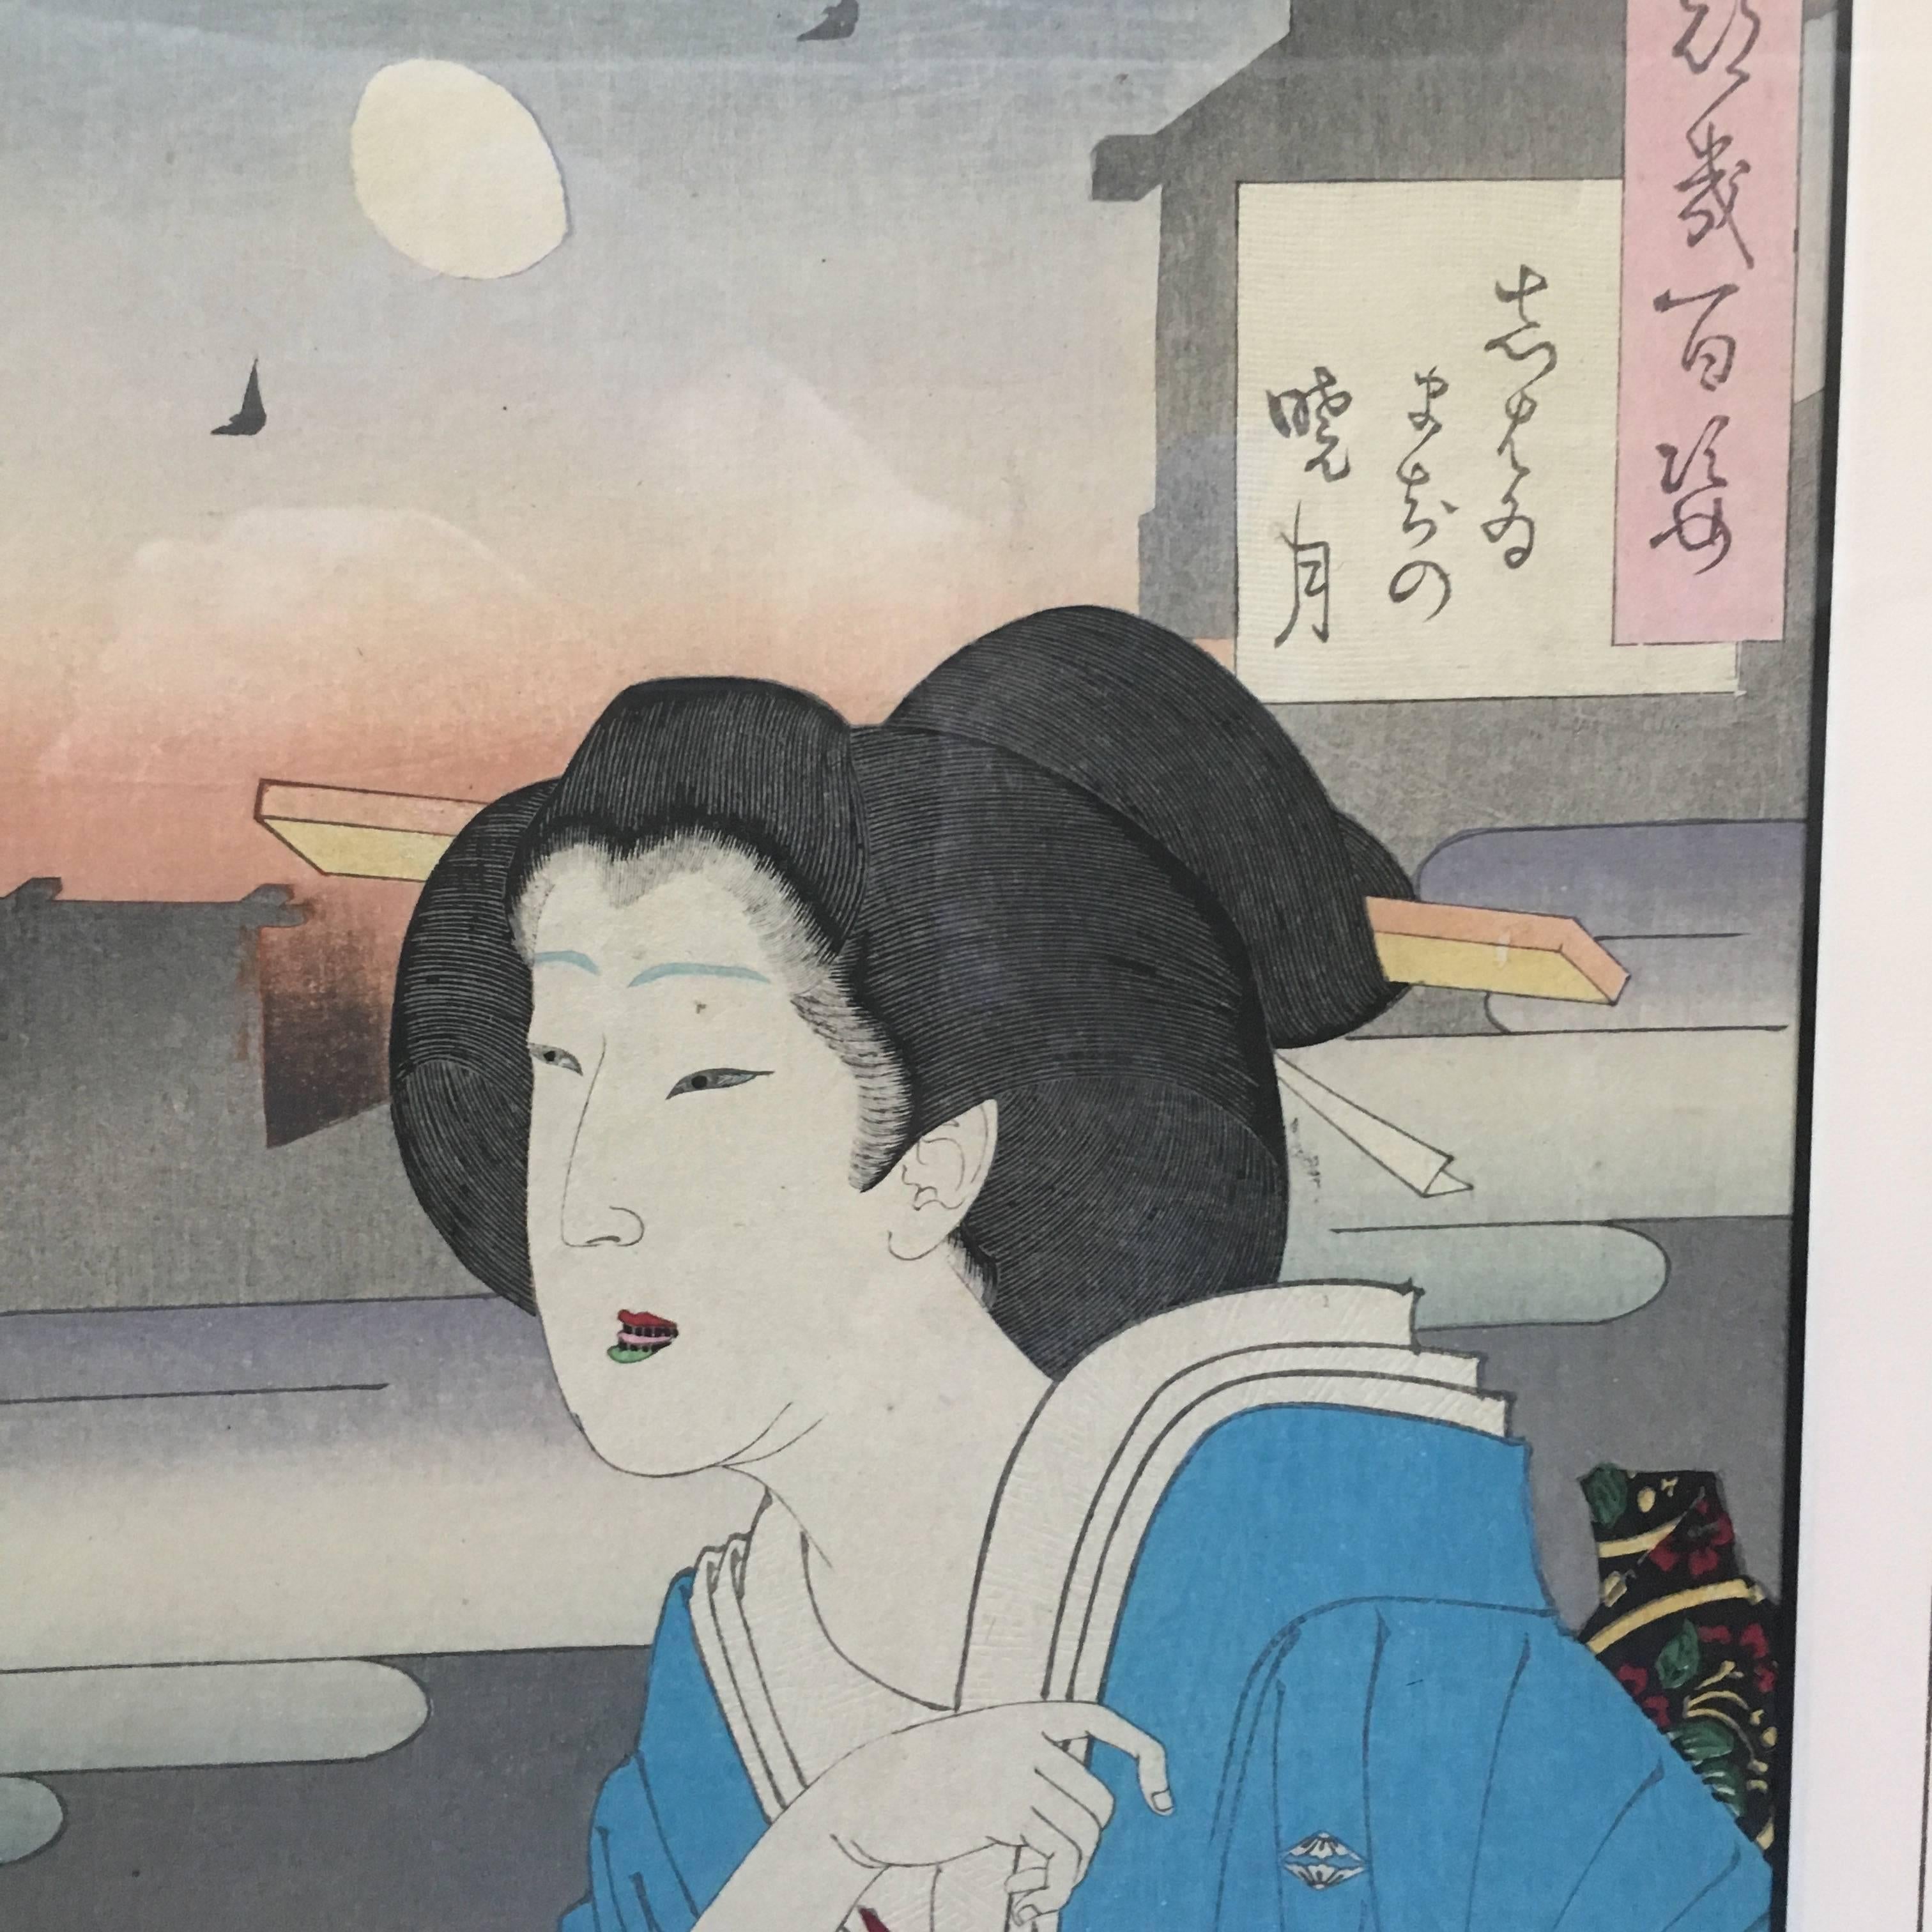 100 Visions of the Moon, Woman in a Blue Kimono and Waxing Moon - Painting by Tsukioka Yoshitoshi